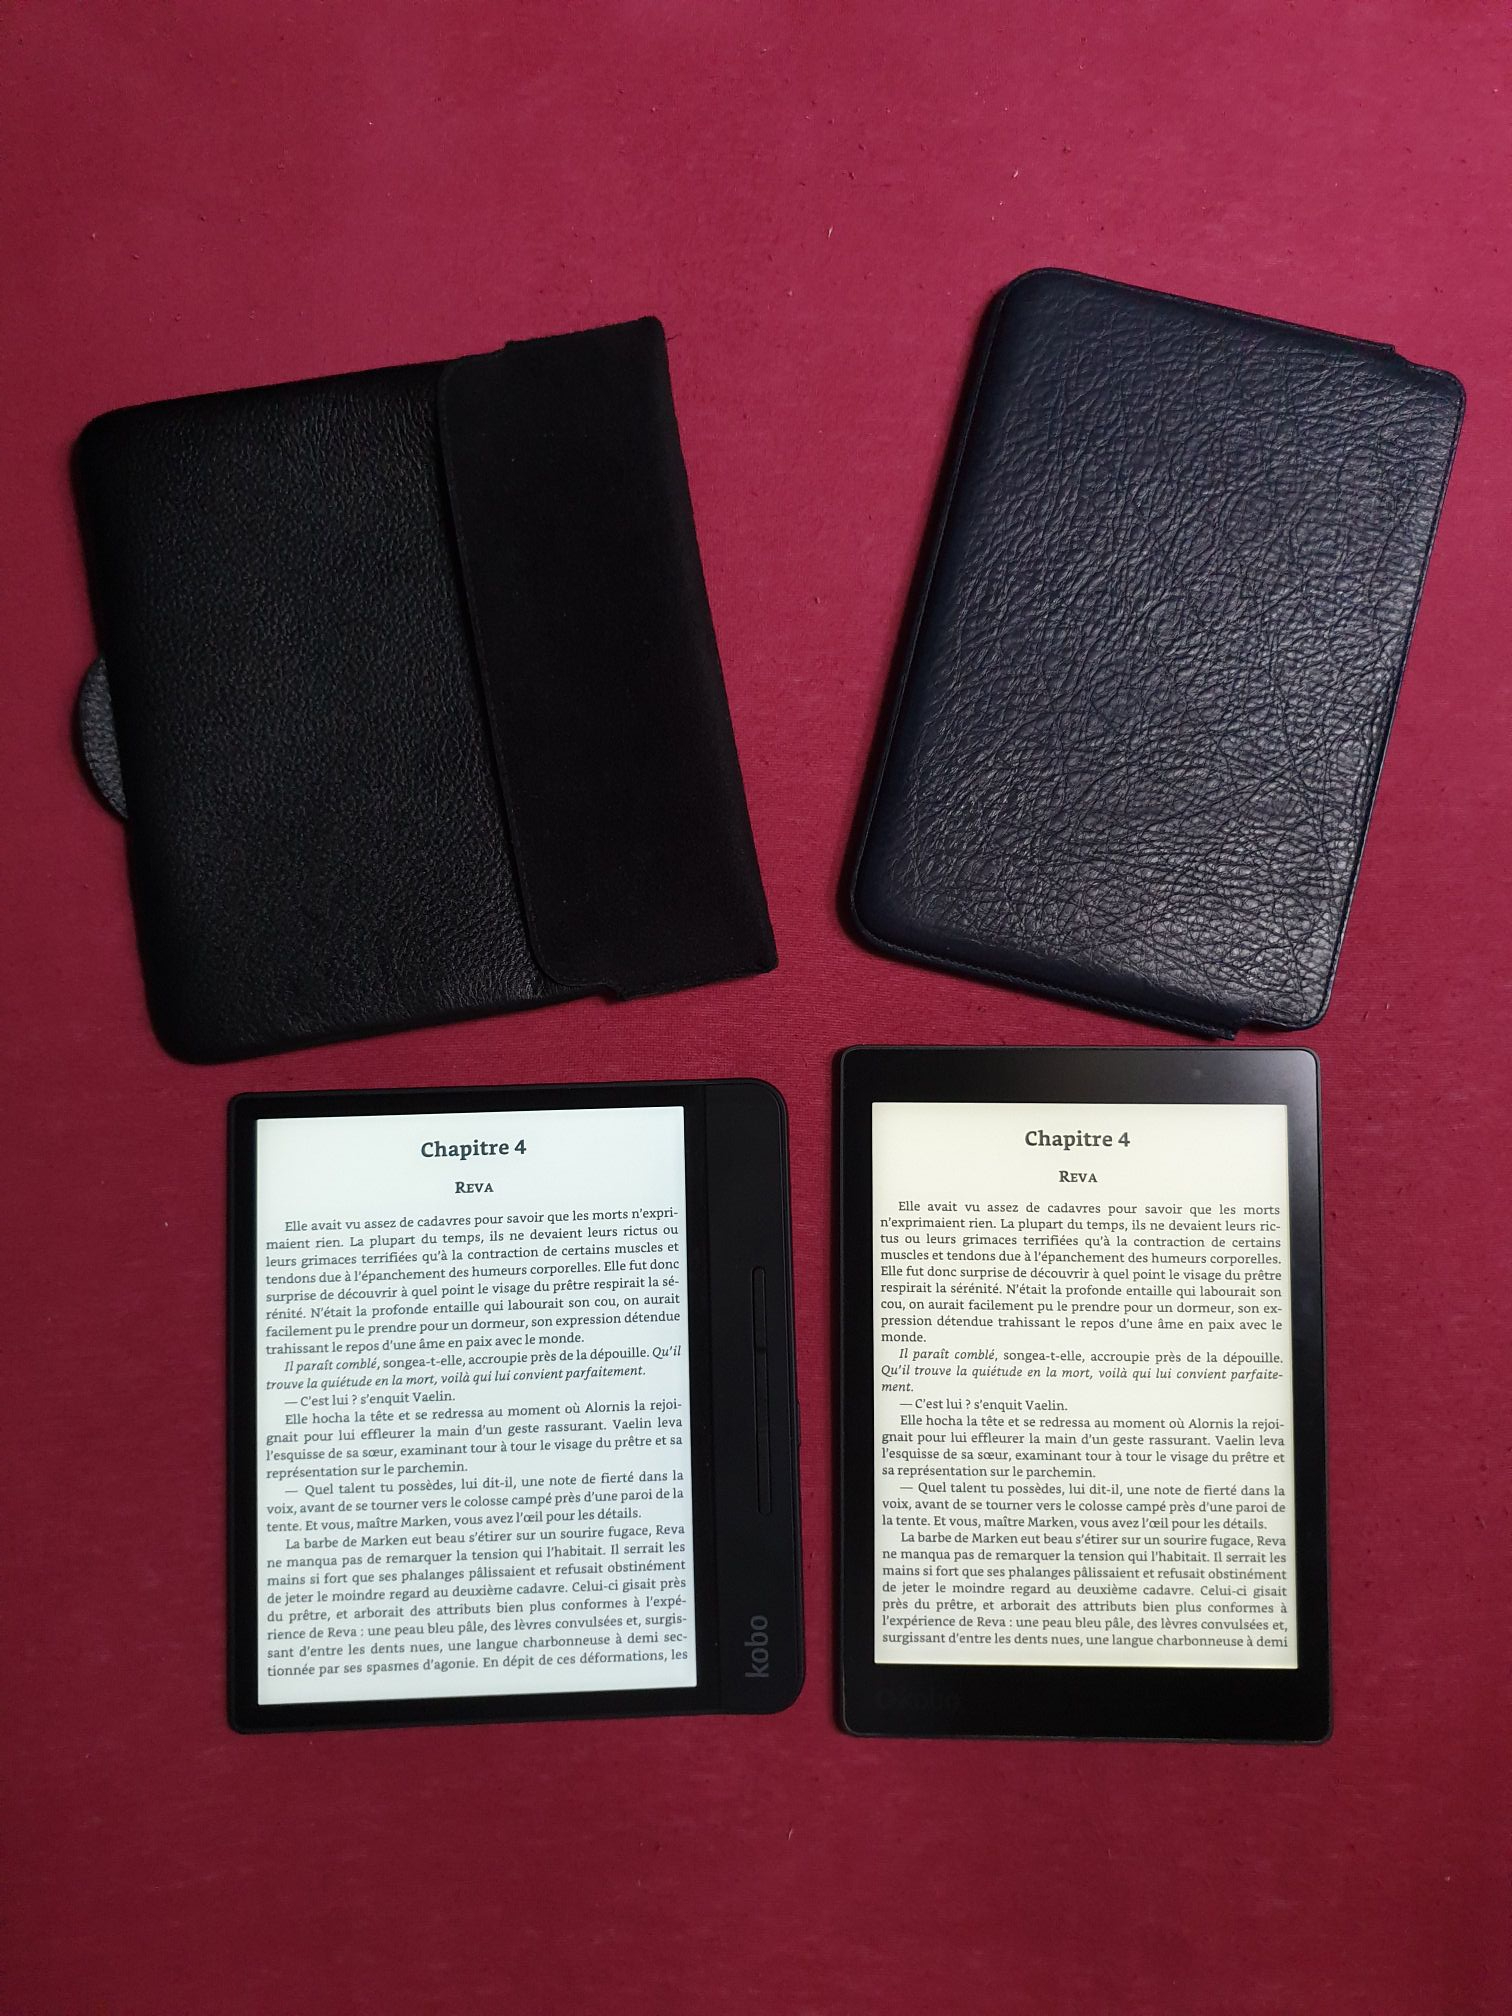 PocketBook Lecteur e-Book InkPad 3 Pro 16 Go avec /écran E-Ink Carta Wi-FI IPX8 Gris m/étallis/é SMARTlight